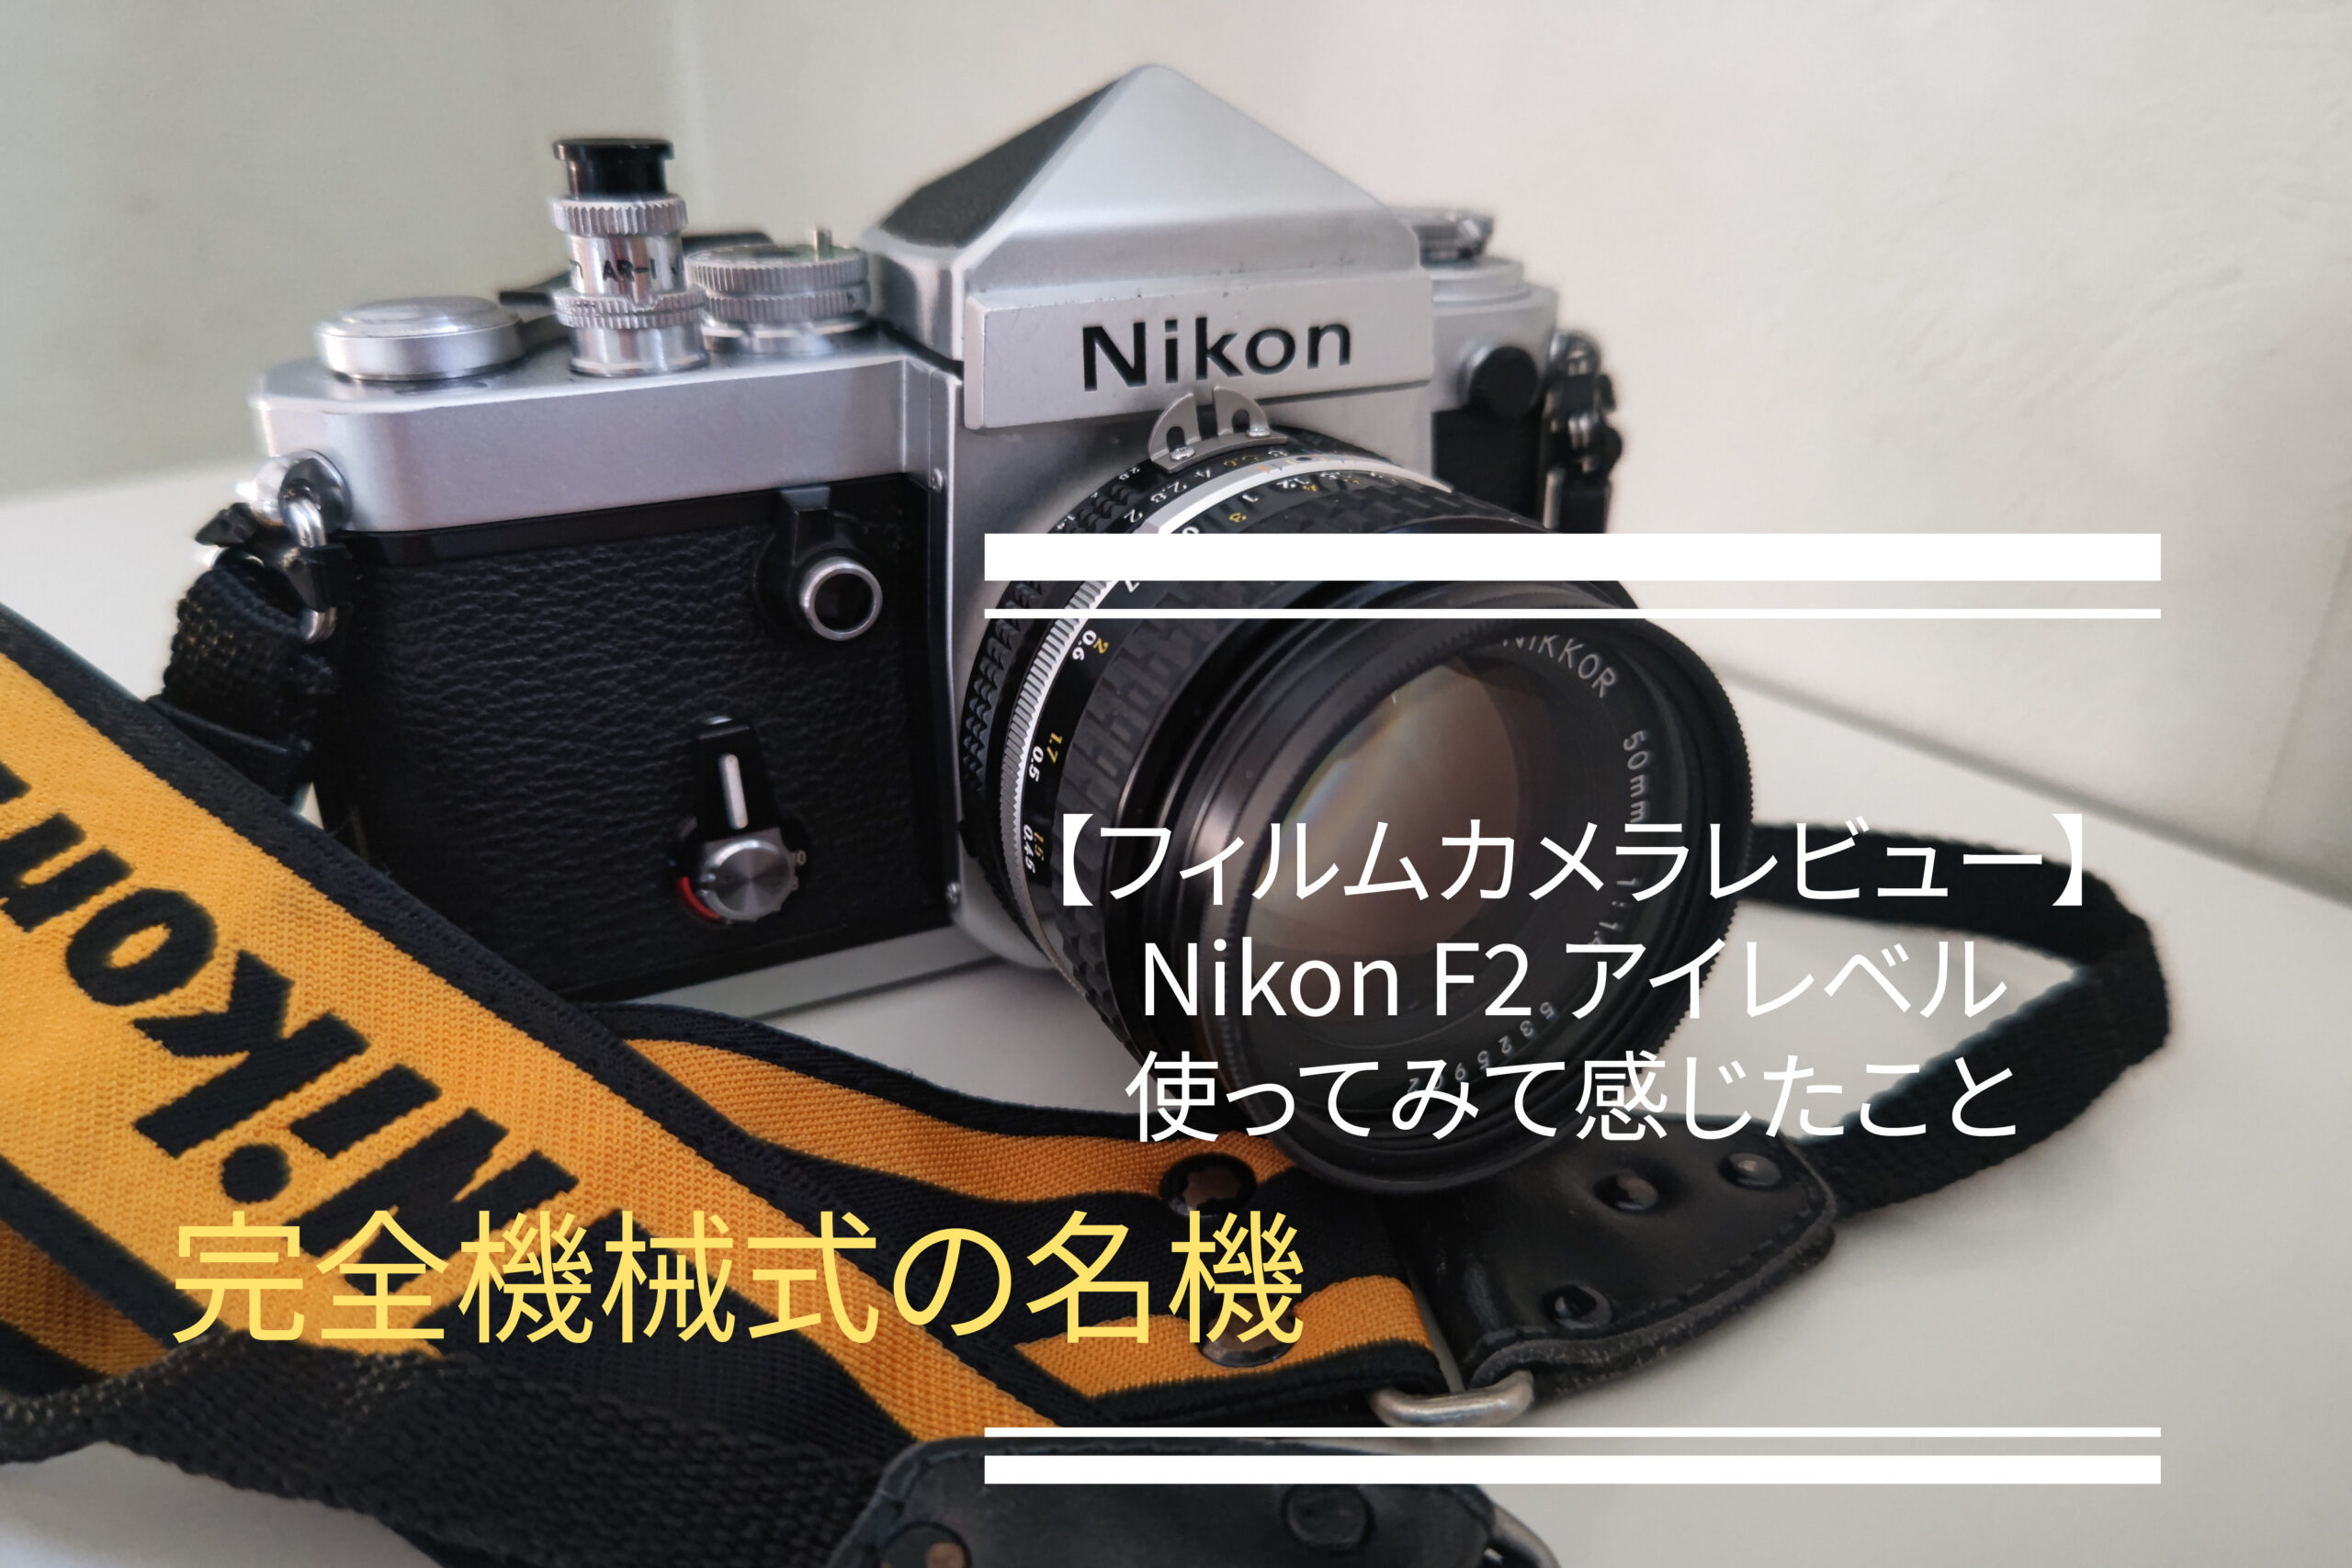 Nikon F2アイレベルレビュー